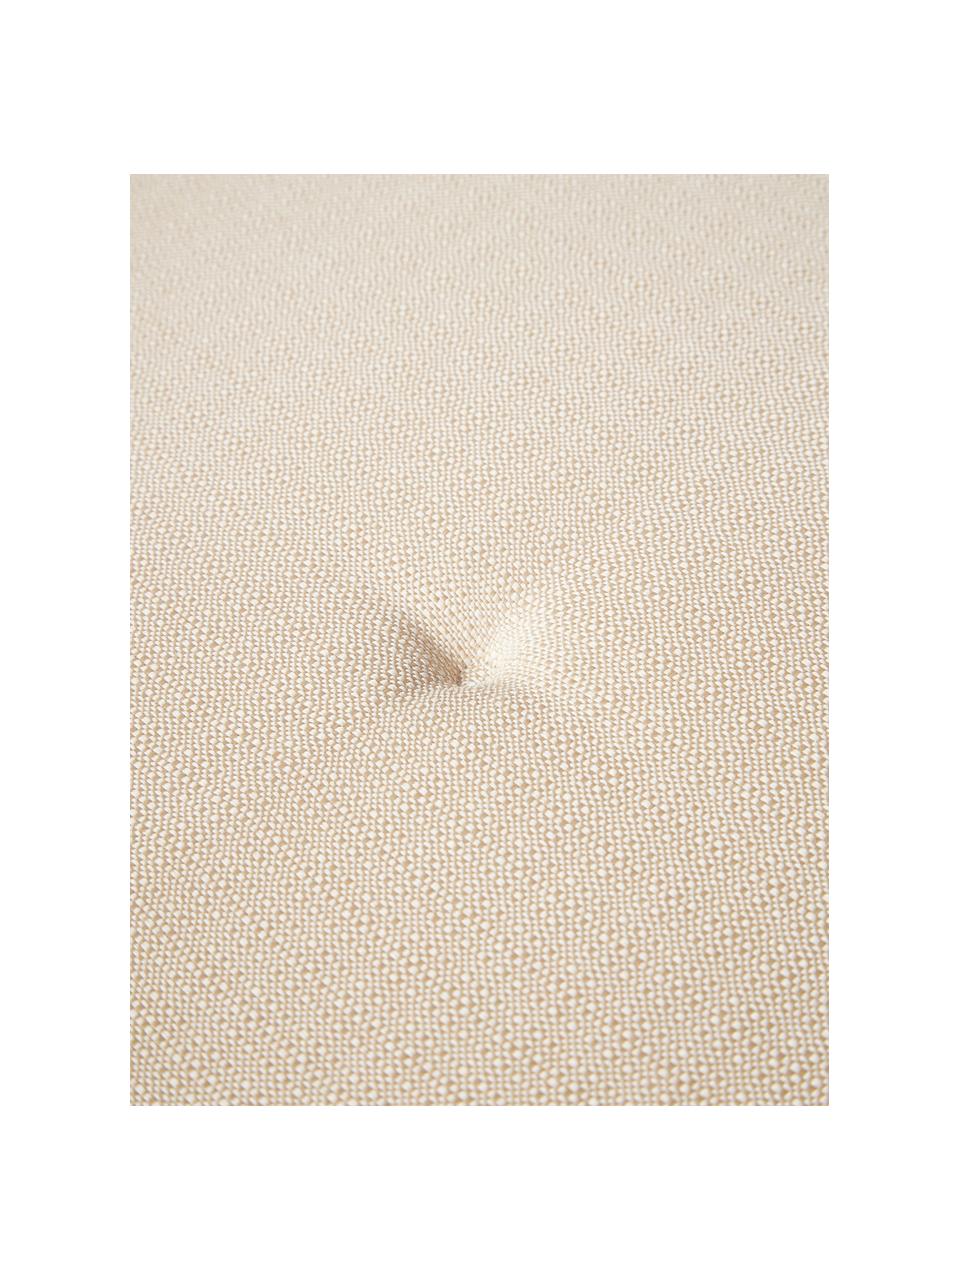 Cuscino panca monocromatico Ortun, Rivestimento: 100% polipropilene, Beige chiaro, Larg. 48 x Lung. 120 cm